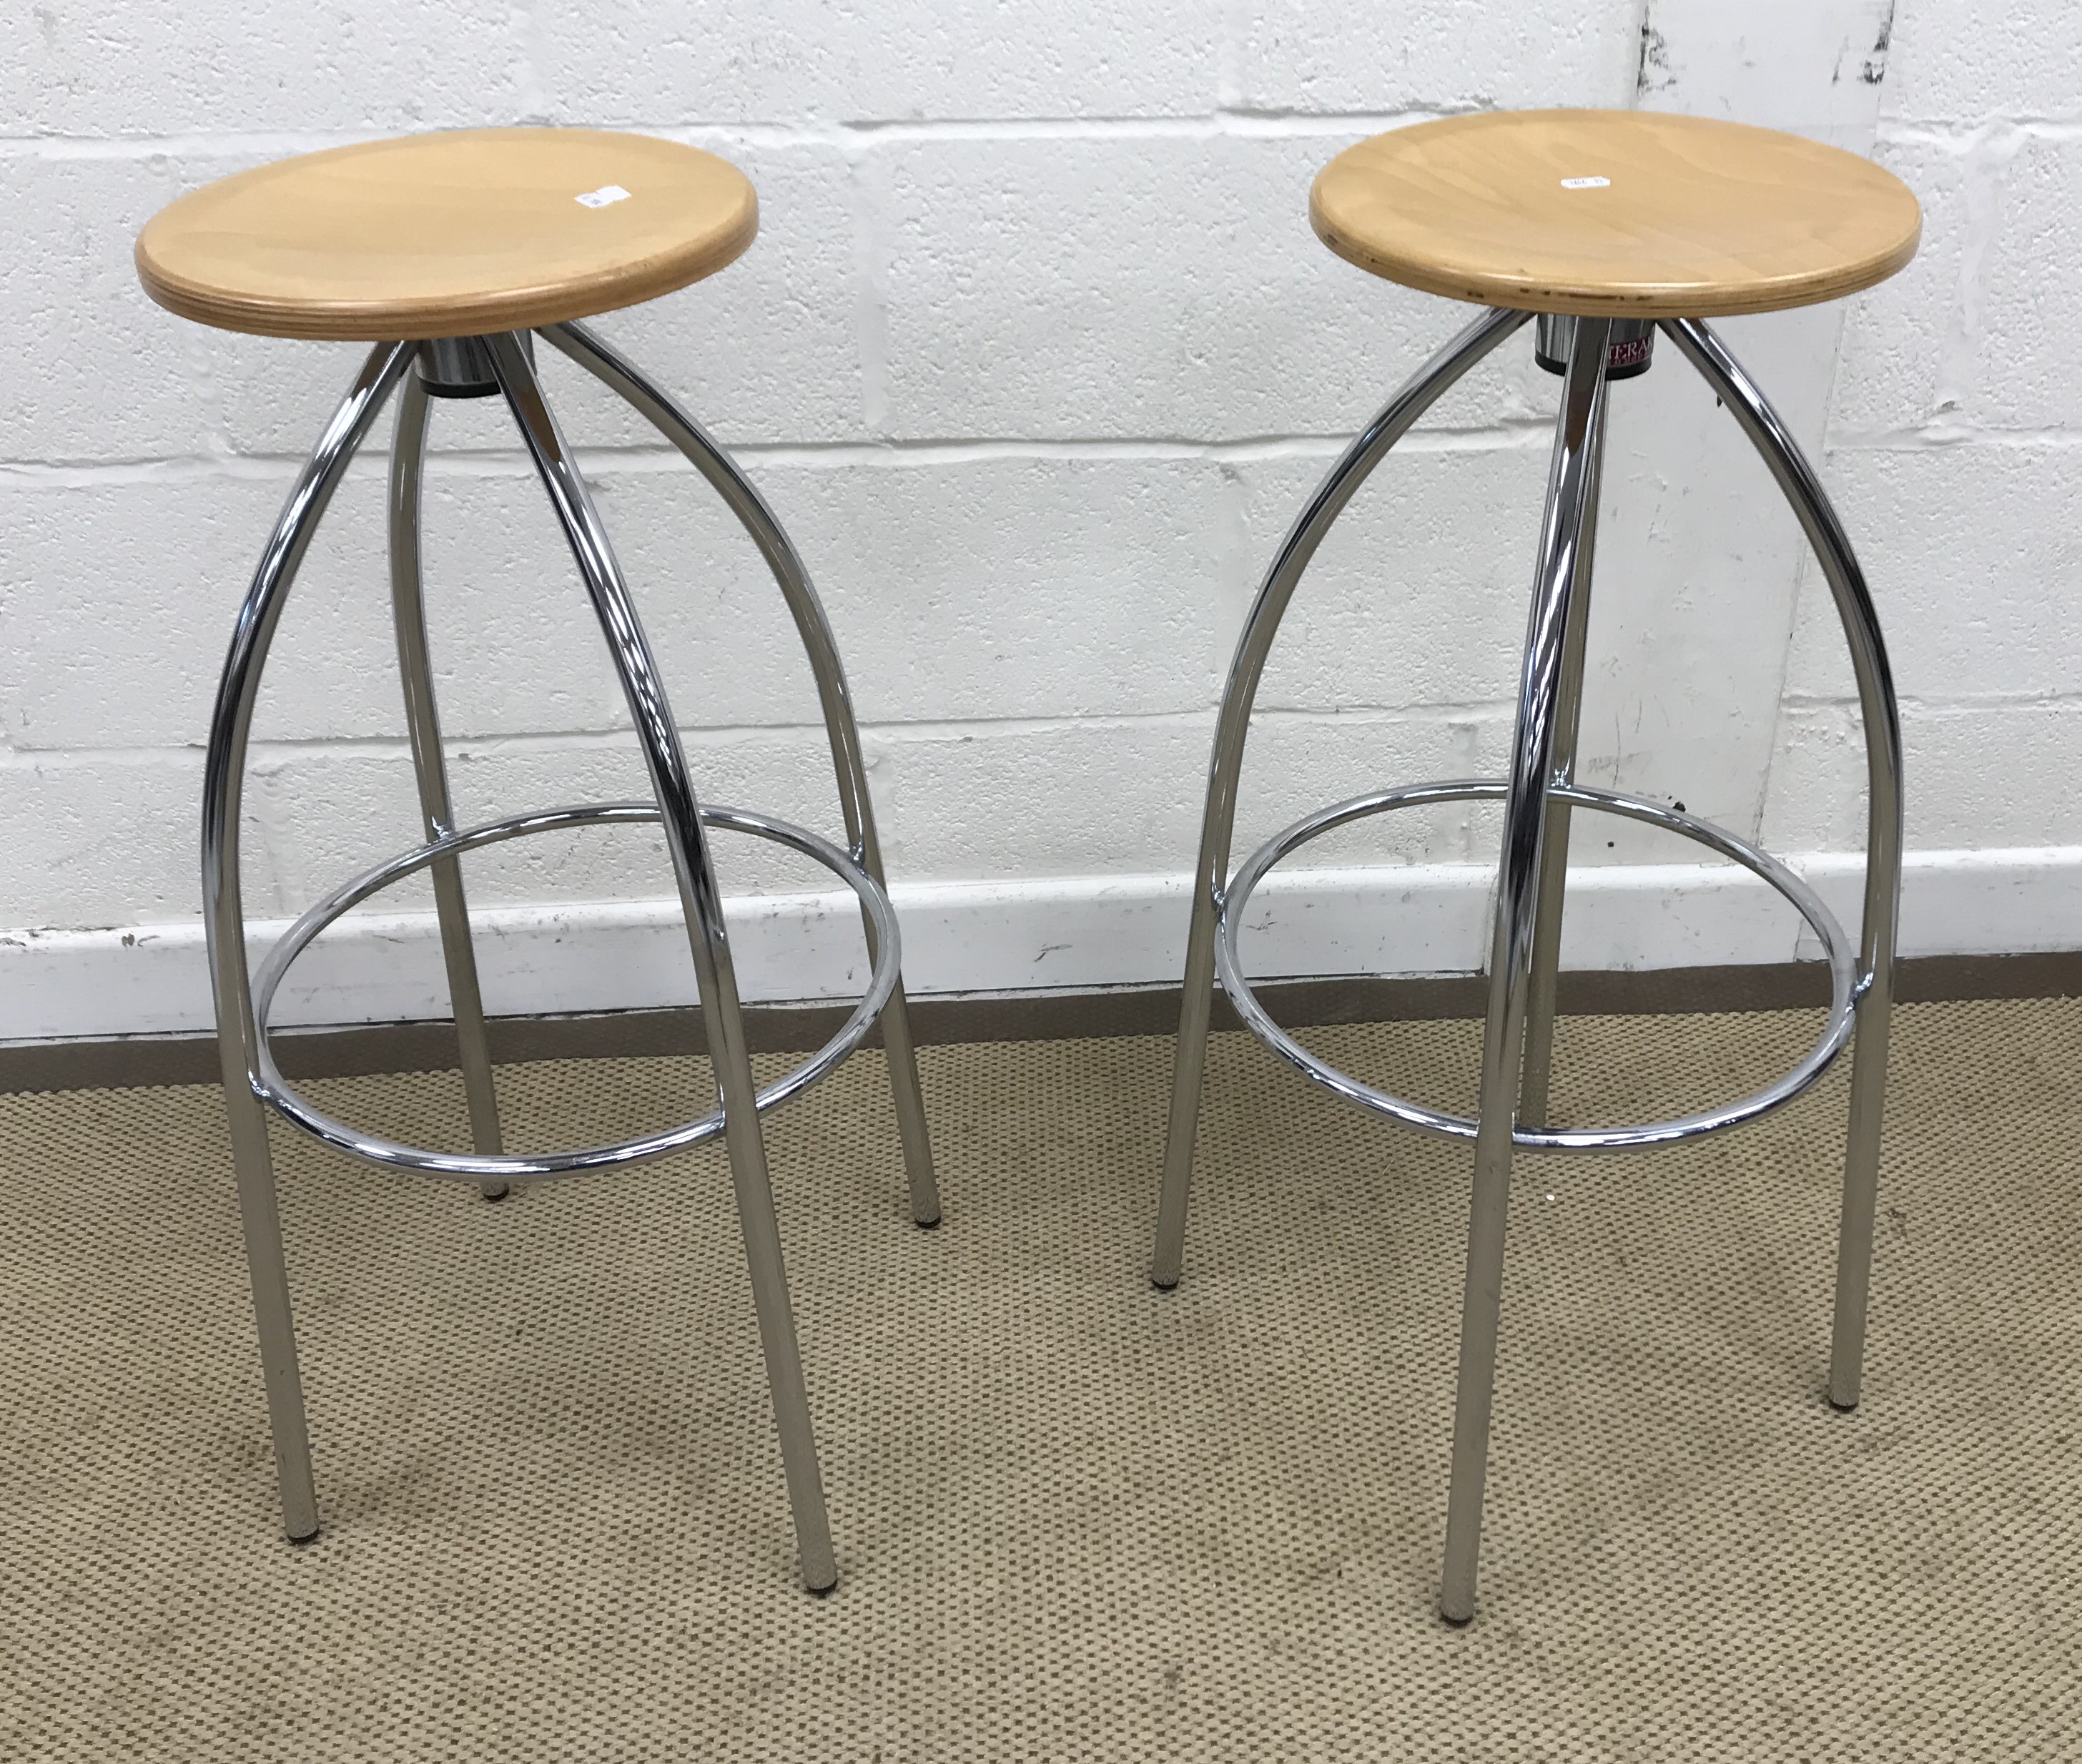 A pair of Merak plywood seated stools on chrome framed bases, 30 cm diameter x 78 cm high,